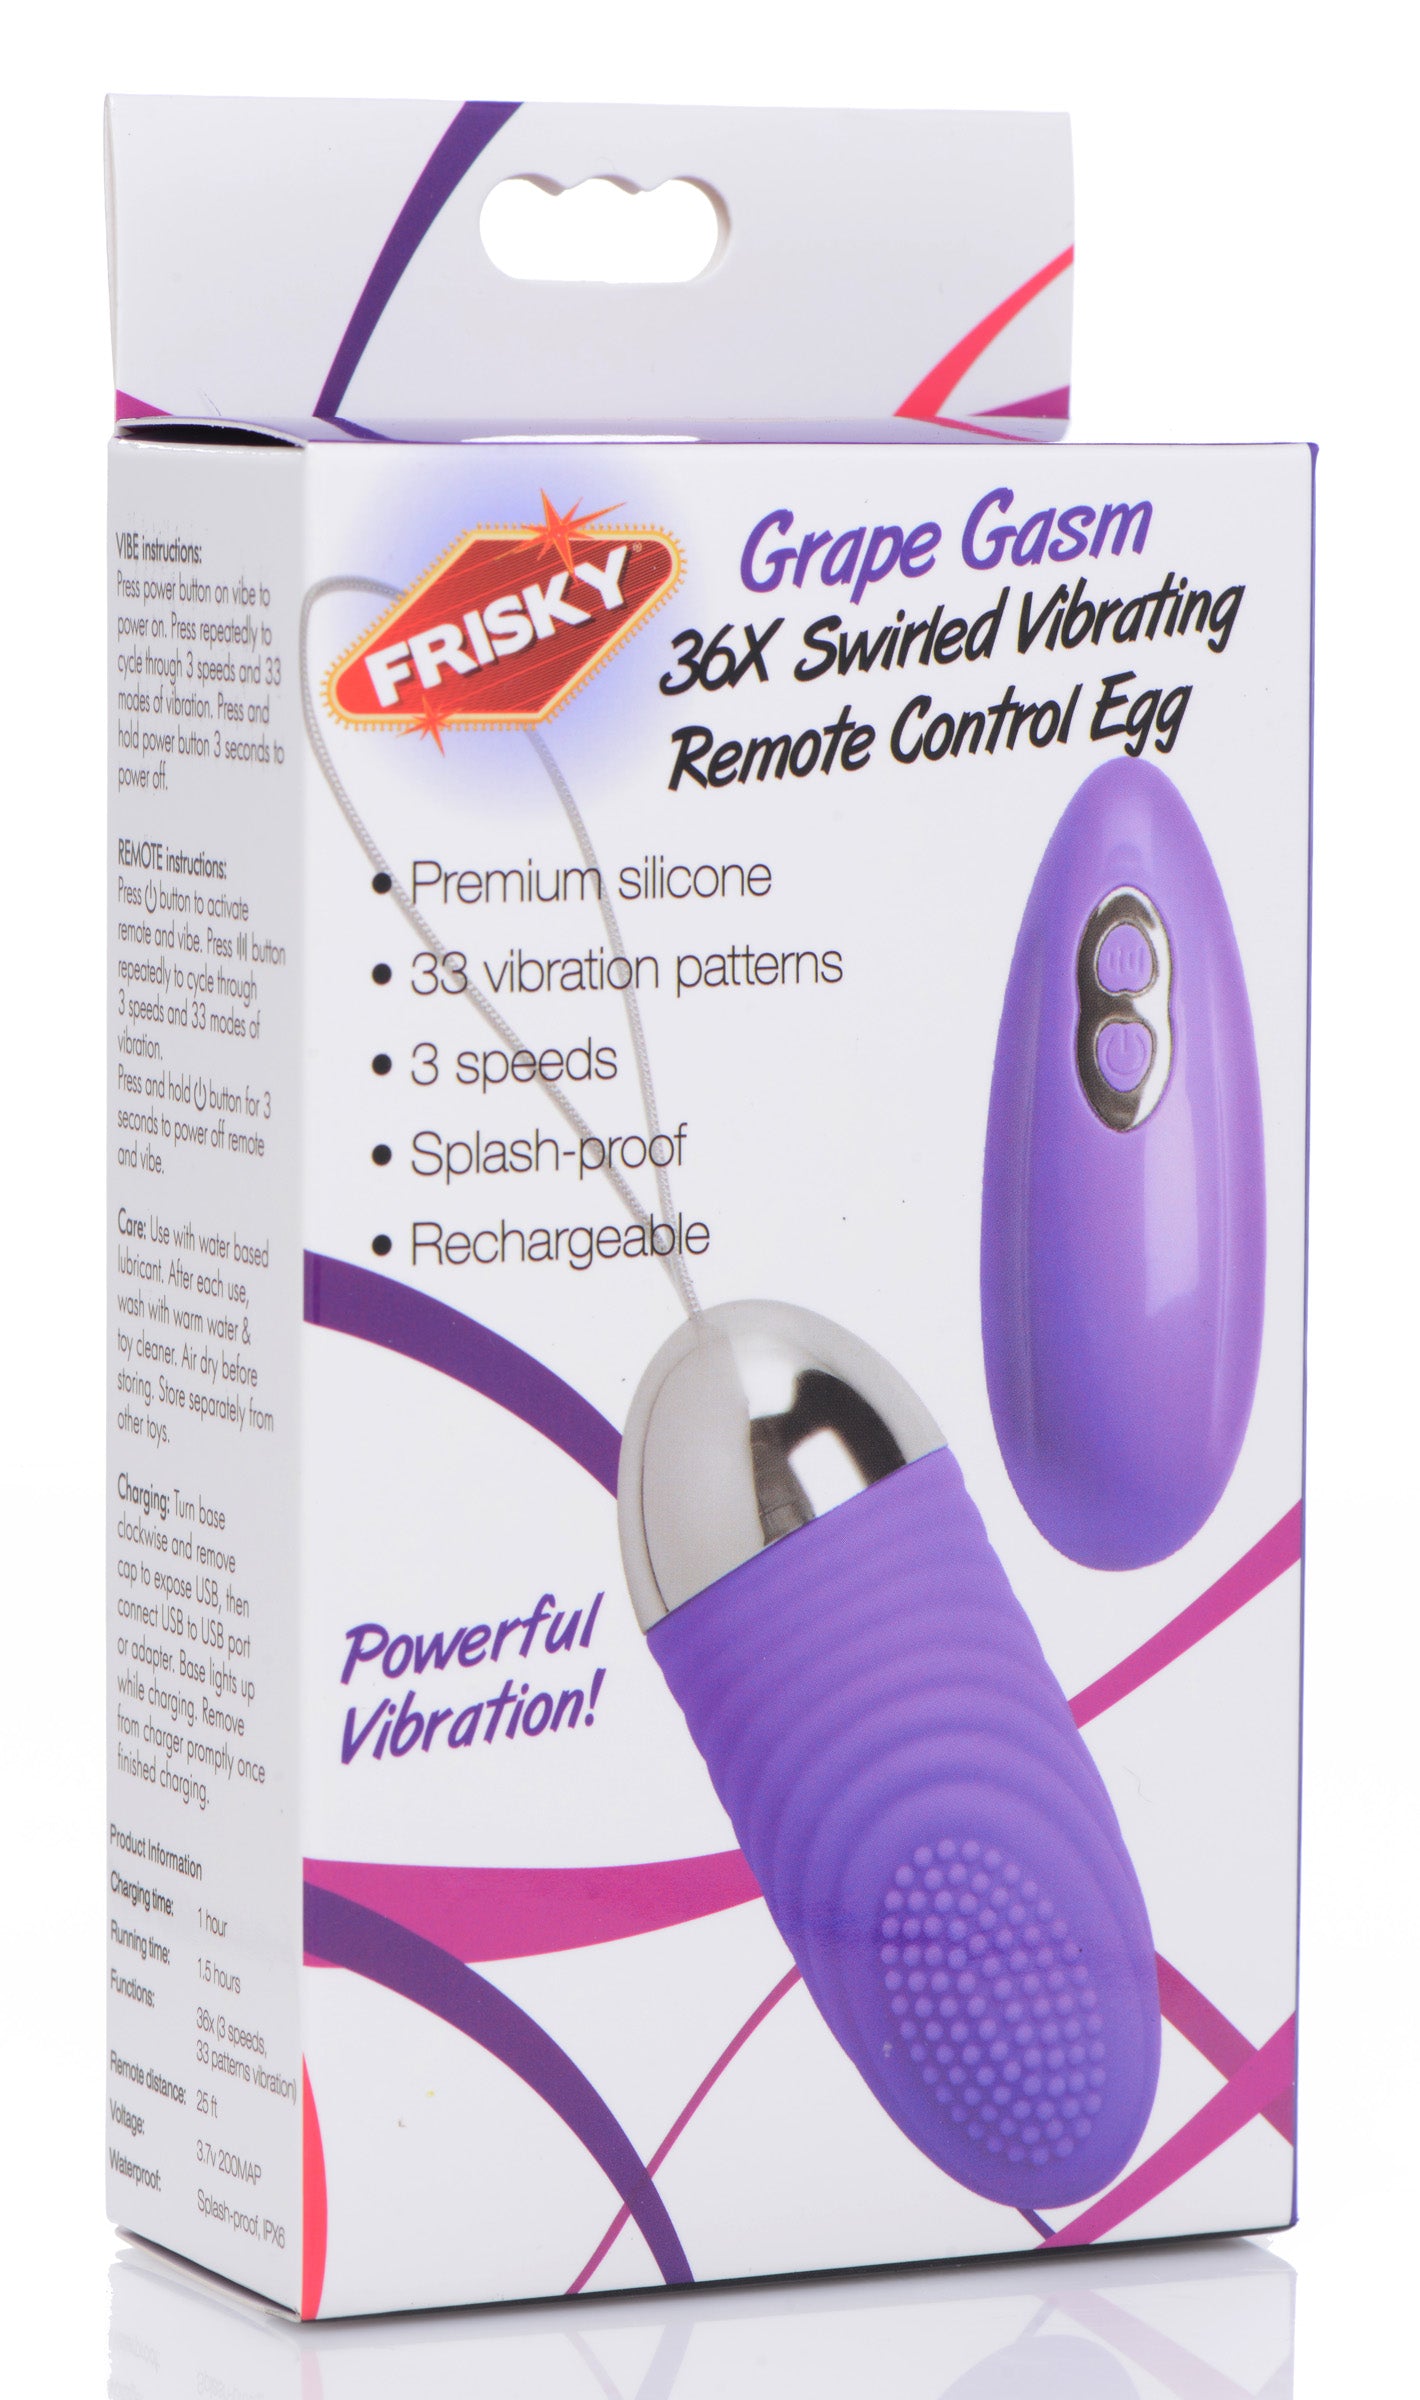 Grape Gasm 36x Swirled Vibrating Remote Control Egg